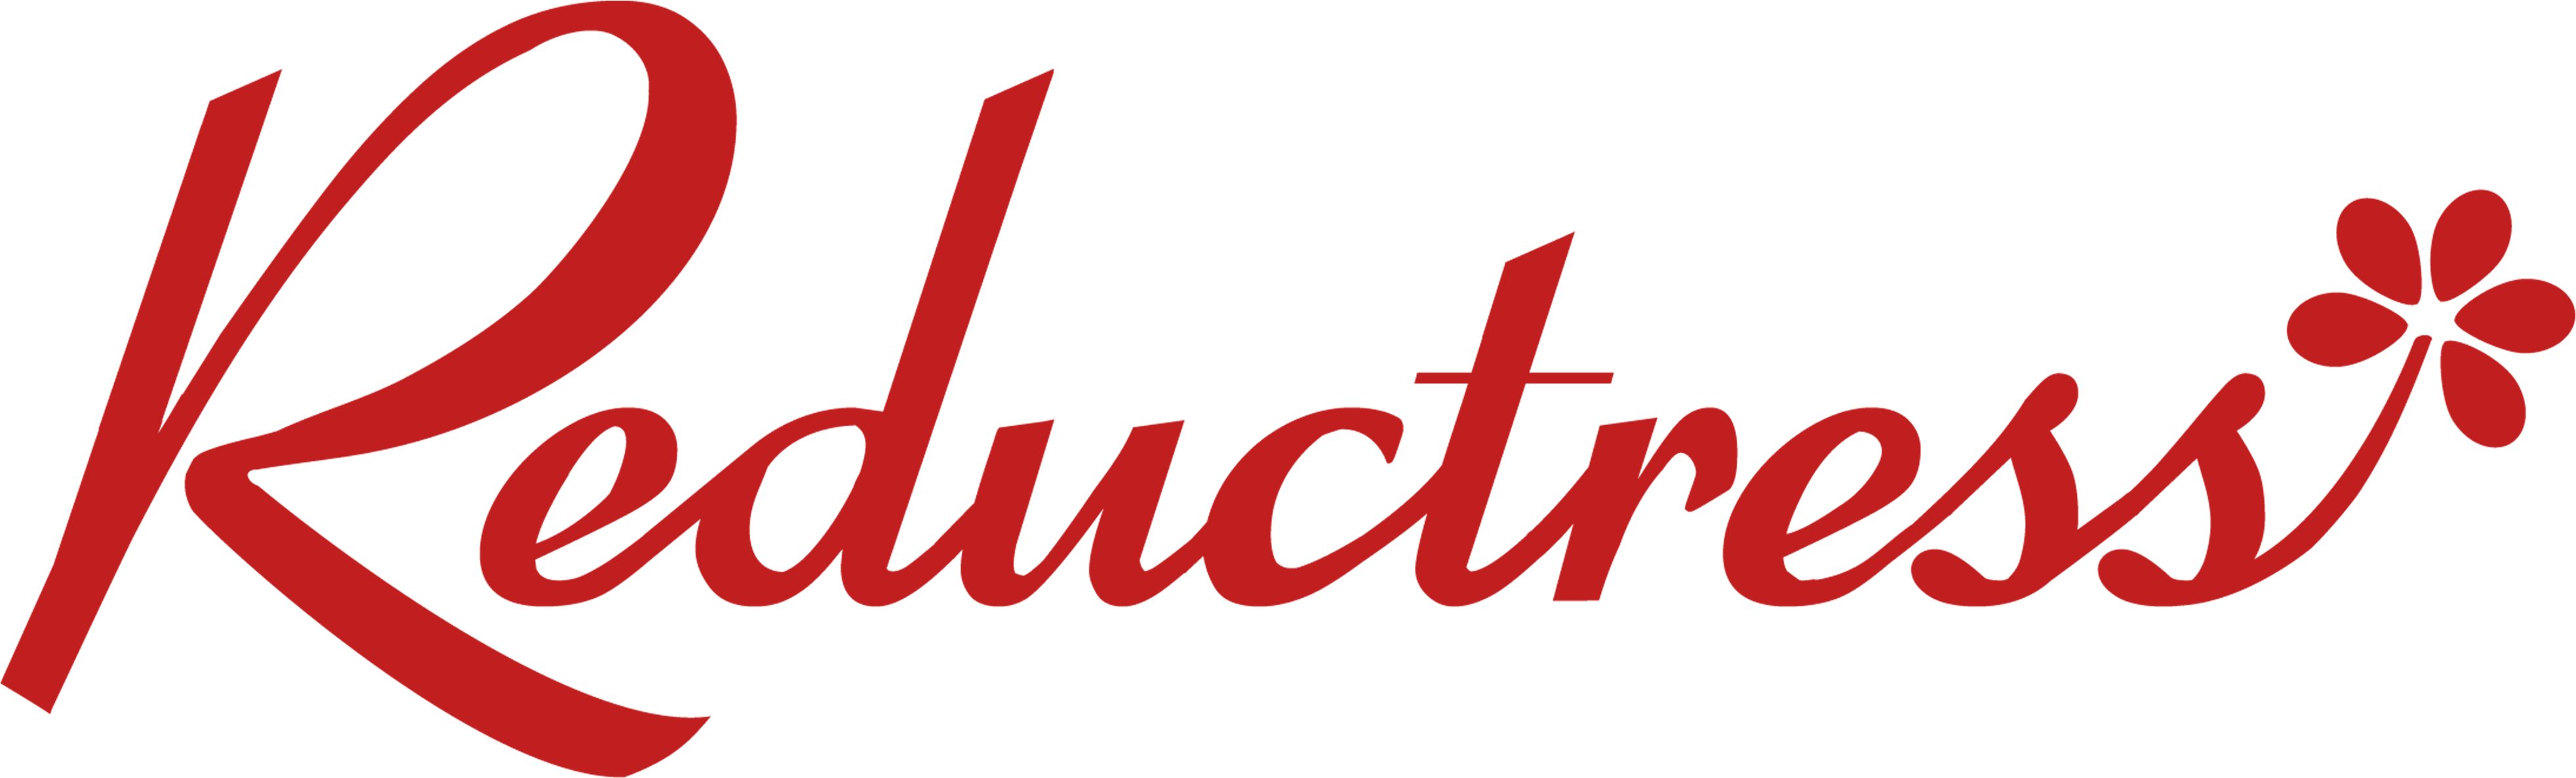 Reductress Logo Redon Gray PNG image